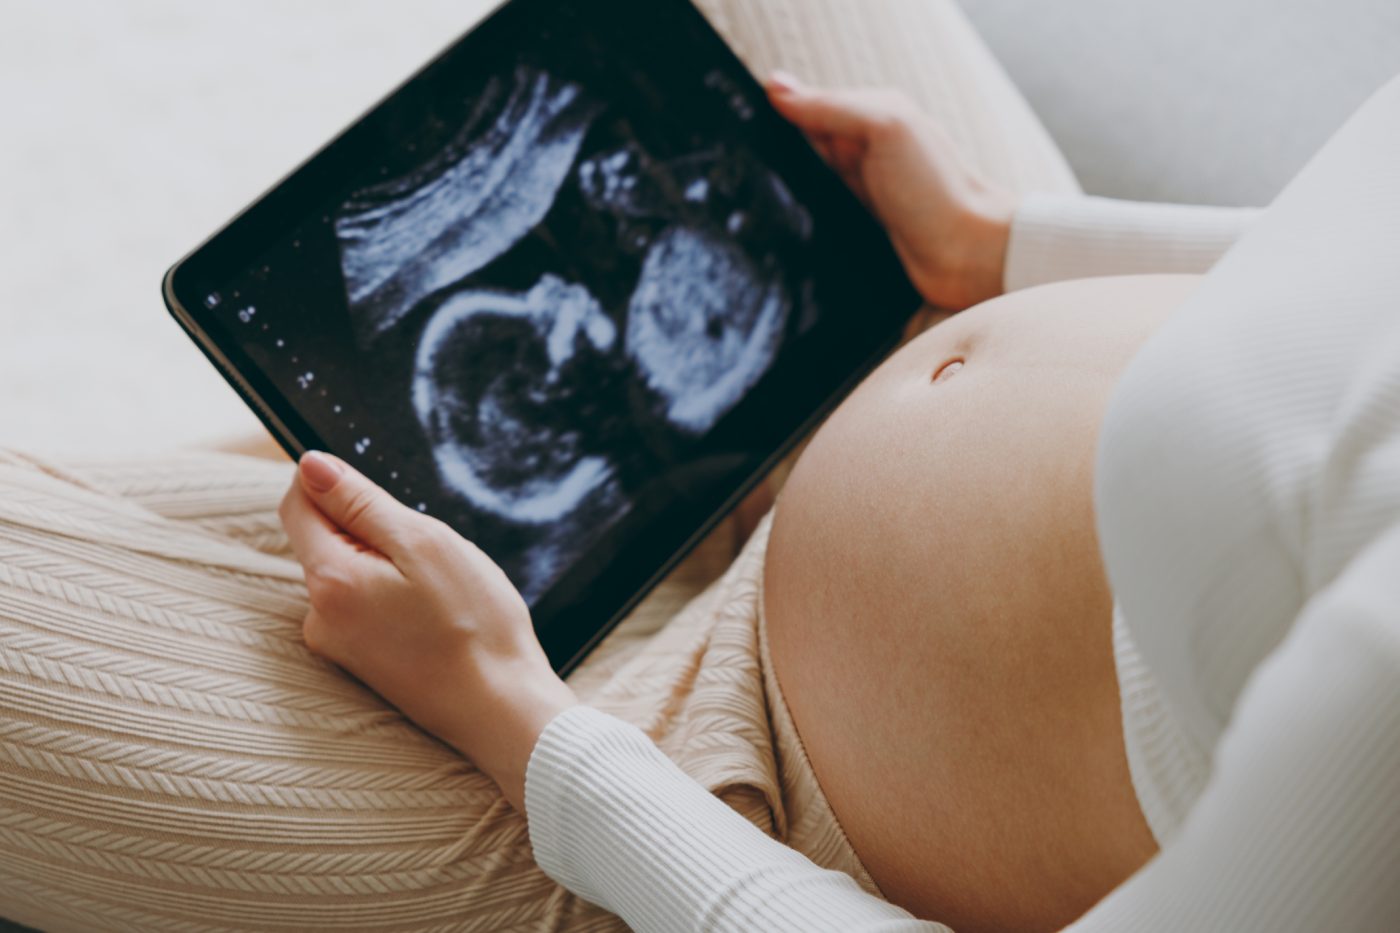 First pregnancy scan after In Vitro Fertilization treatment